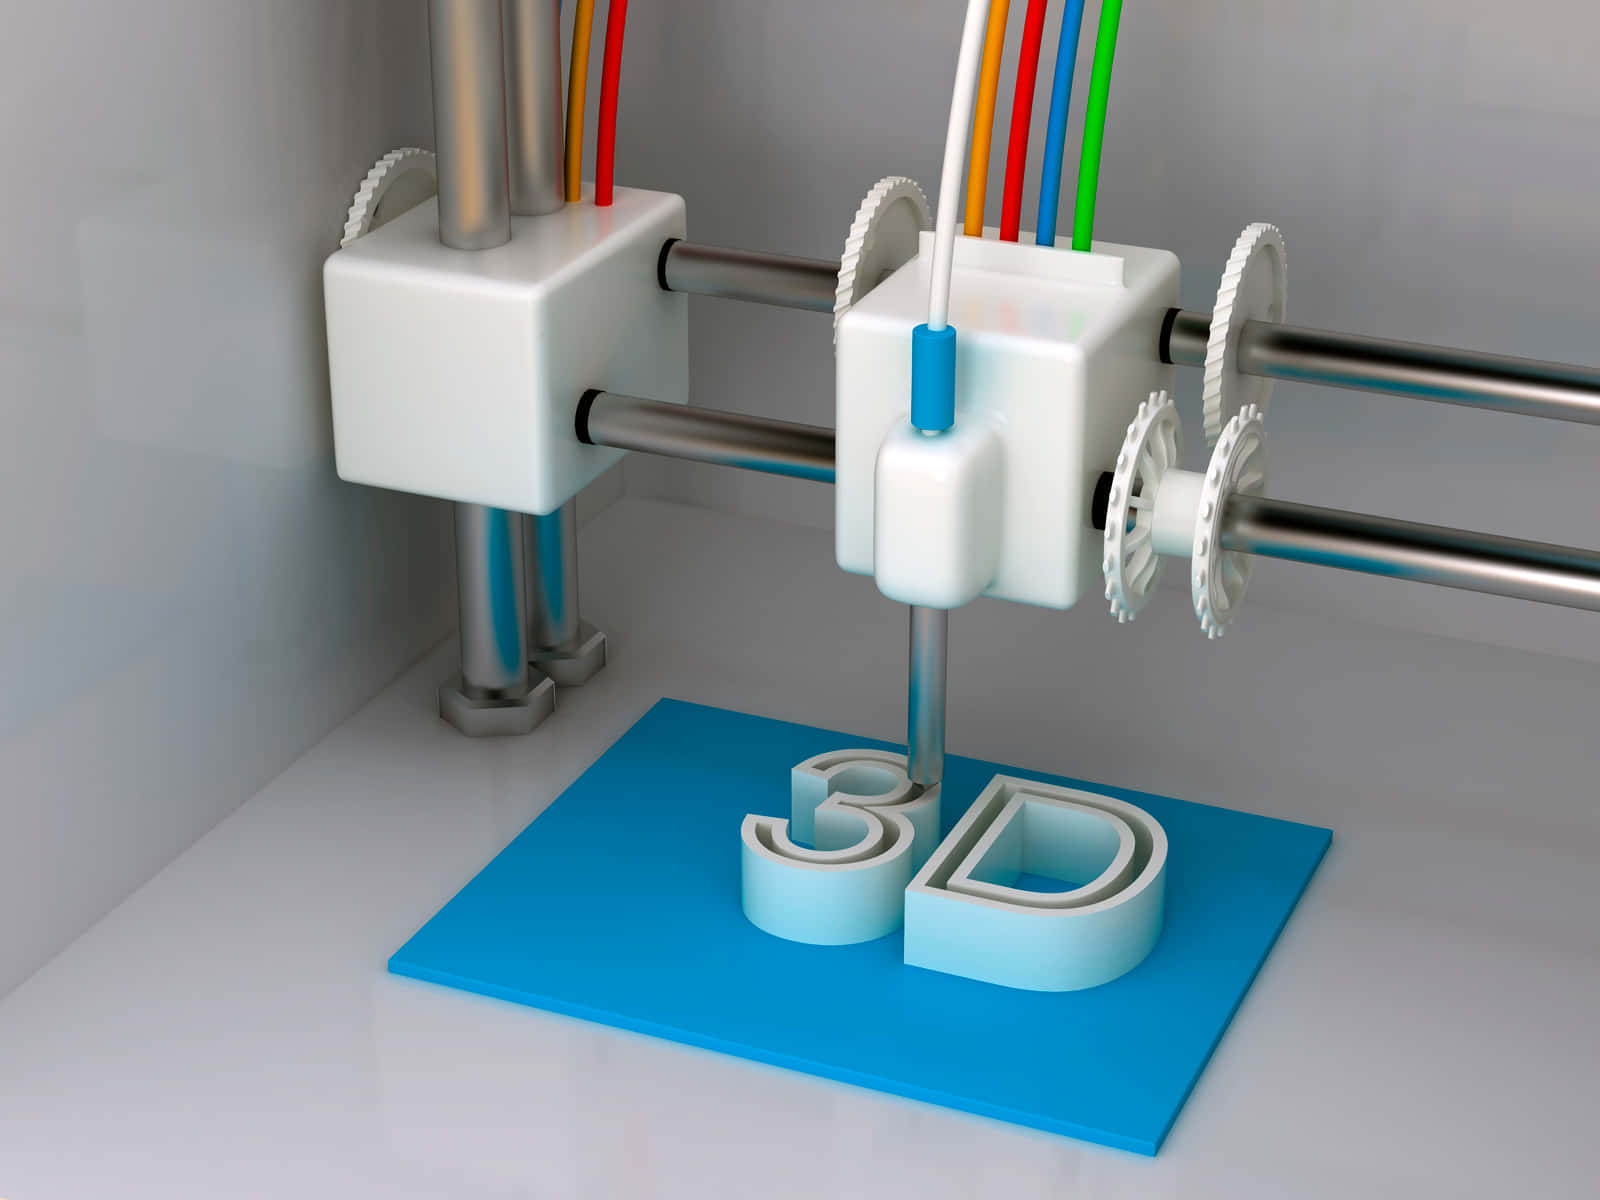 Advanced 3D Printer in Action Wallpaper